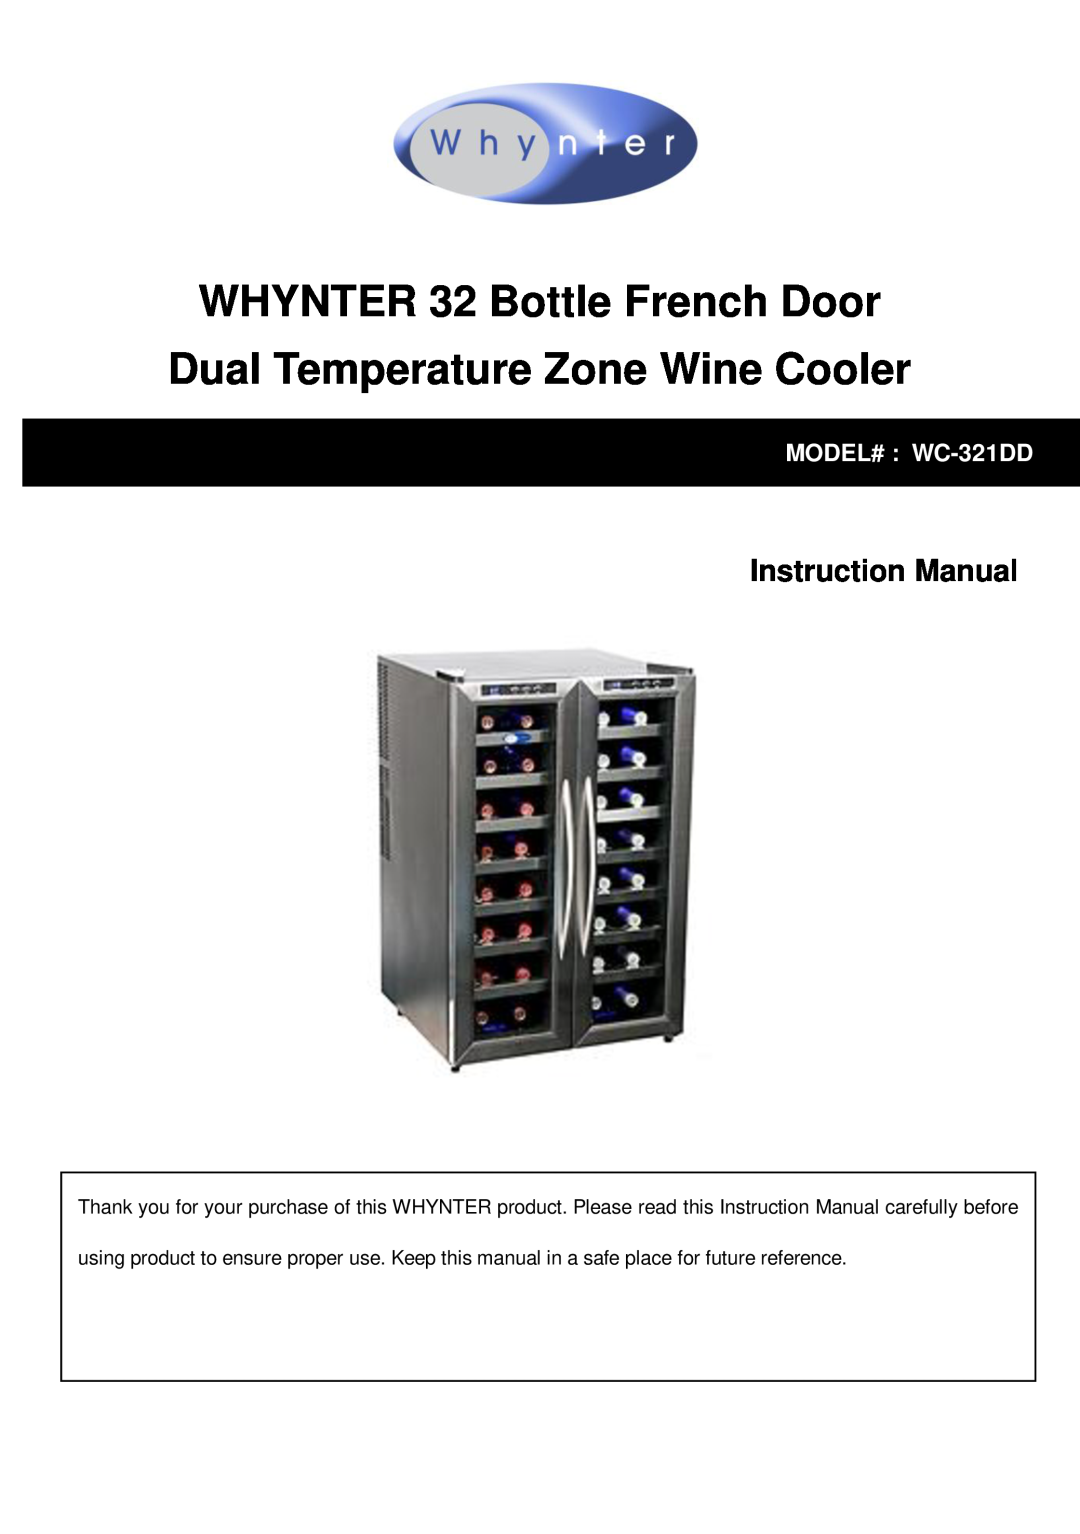 Whynter instruction manual Freestanding Wine Cooler, MODEL# WC-321DD 